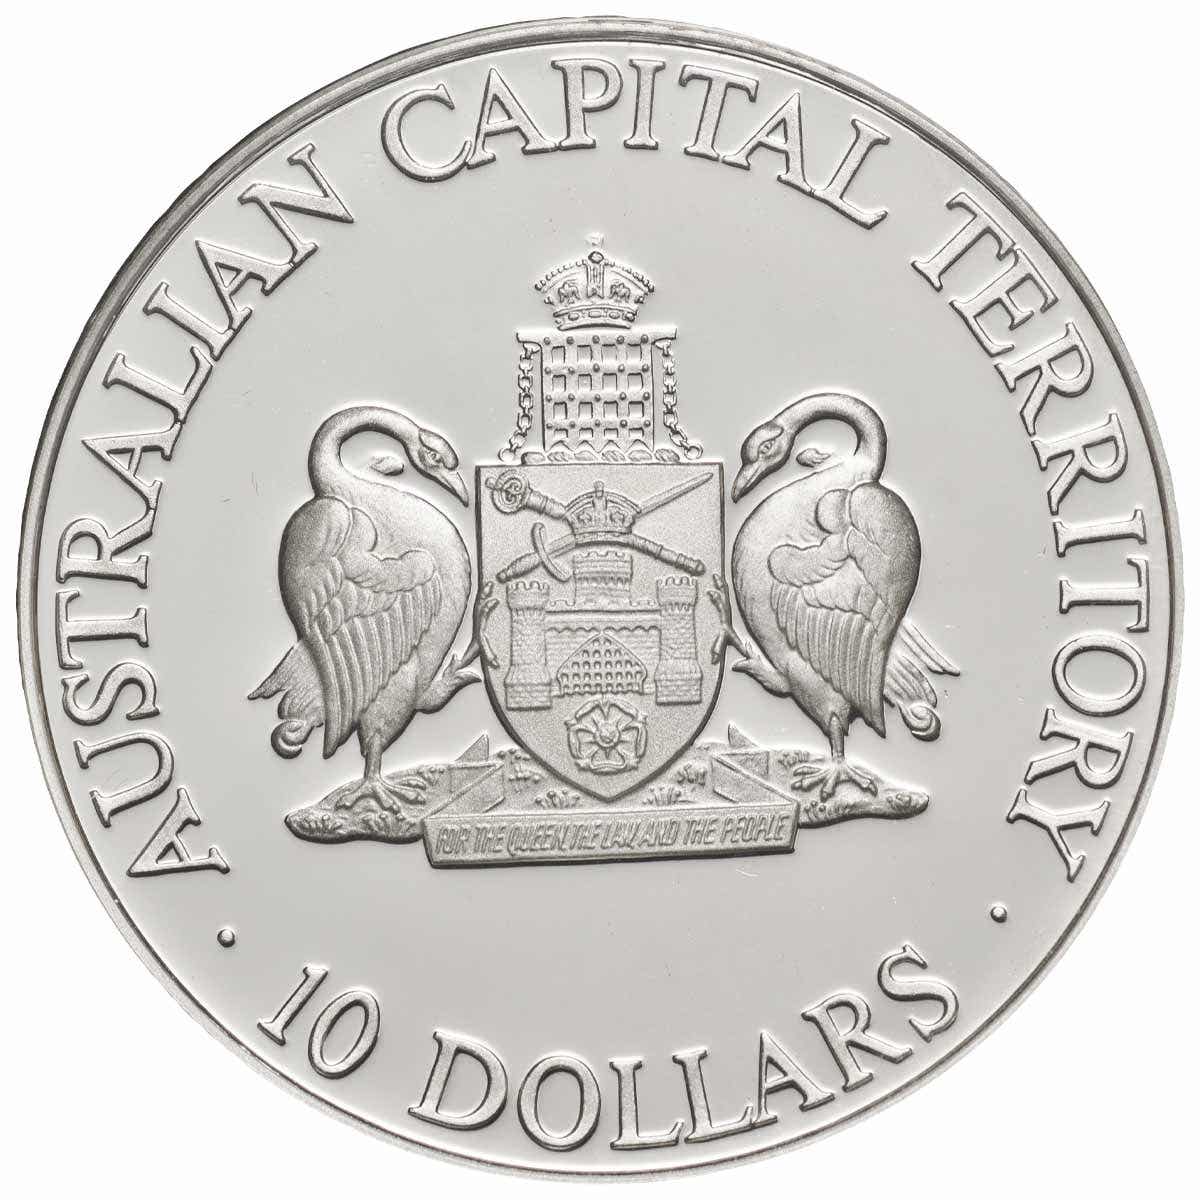 1993 $10 Australian Capital Territory Silver Proof Coin